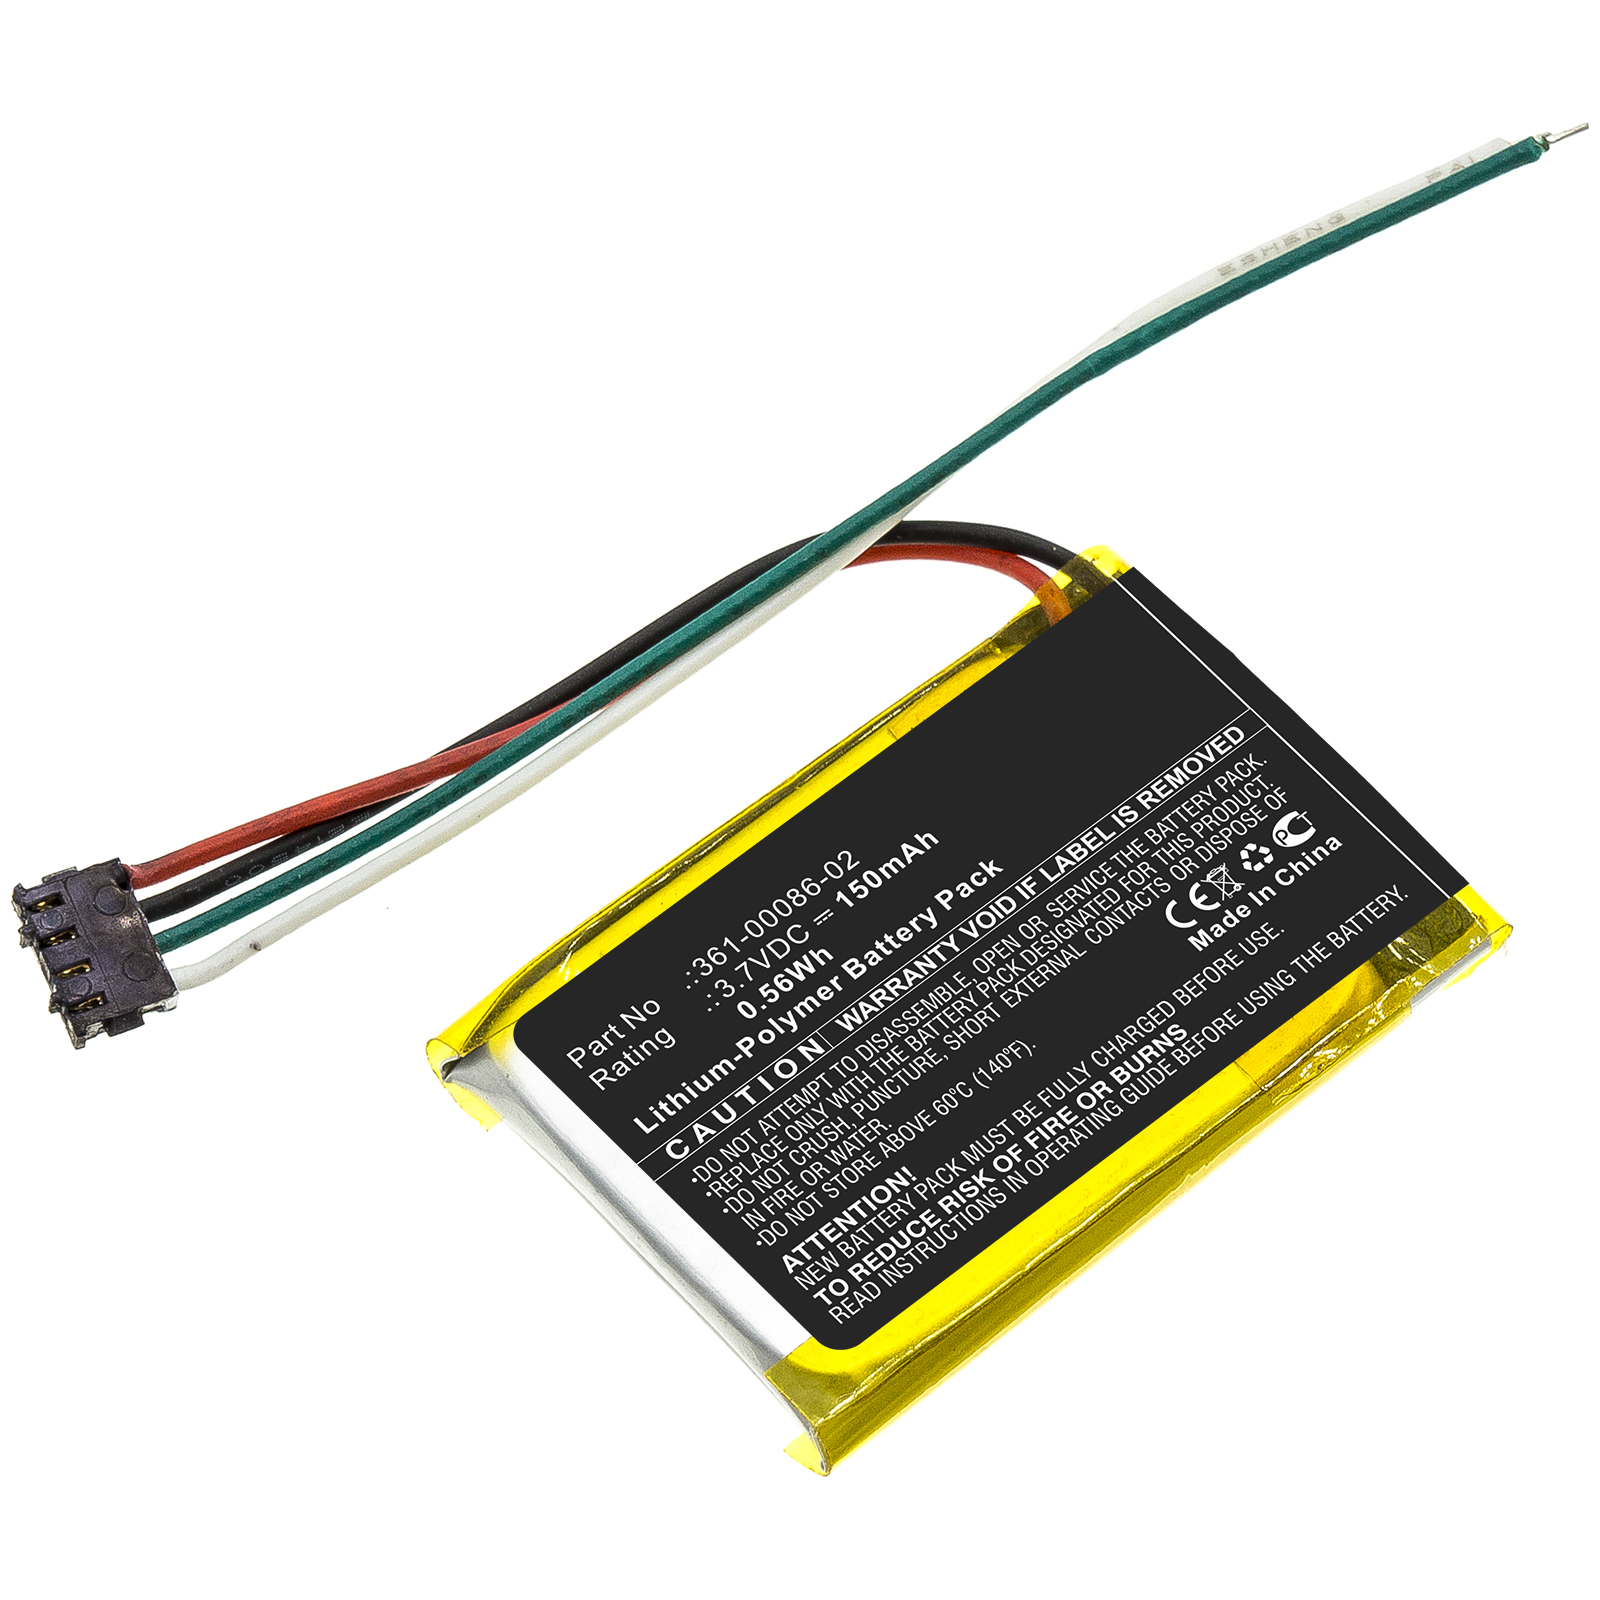 Synergy Digital GPS Battery, Compatible with Garmin 361-00086-02 GPS Battery (3.7V, Li-Pol, 150mAh)